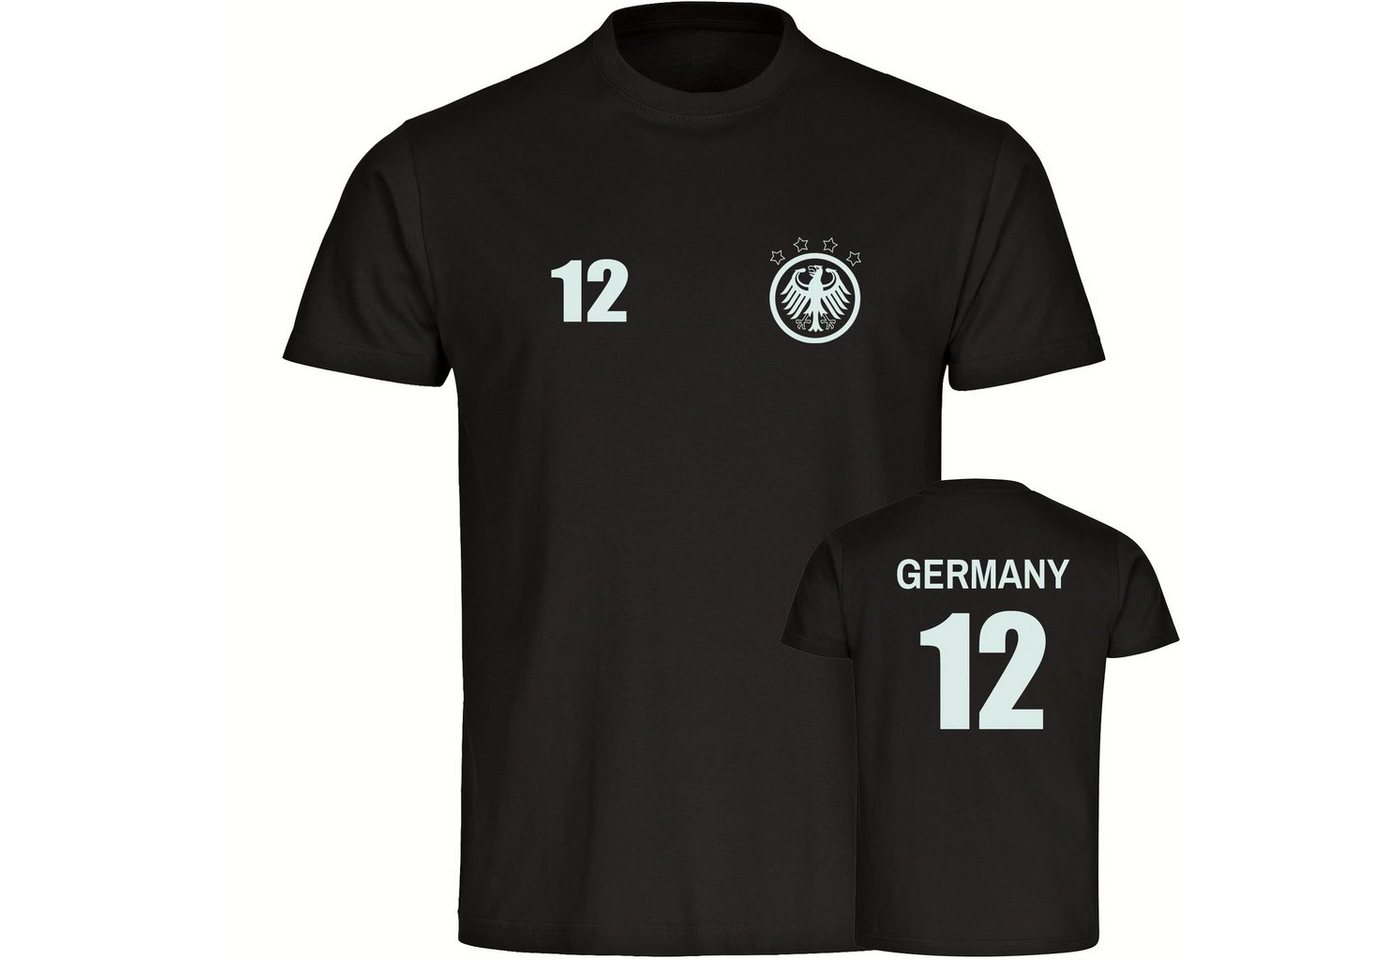 multifanshop T-Shirt Kinder Germany - Adler Retro Trikot 12 - Boy Girl von multifanshop